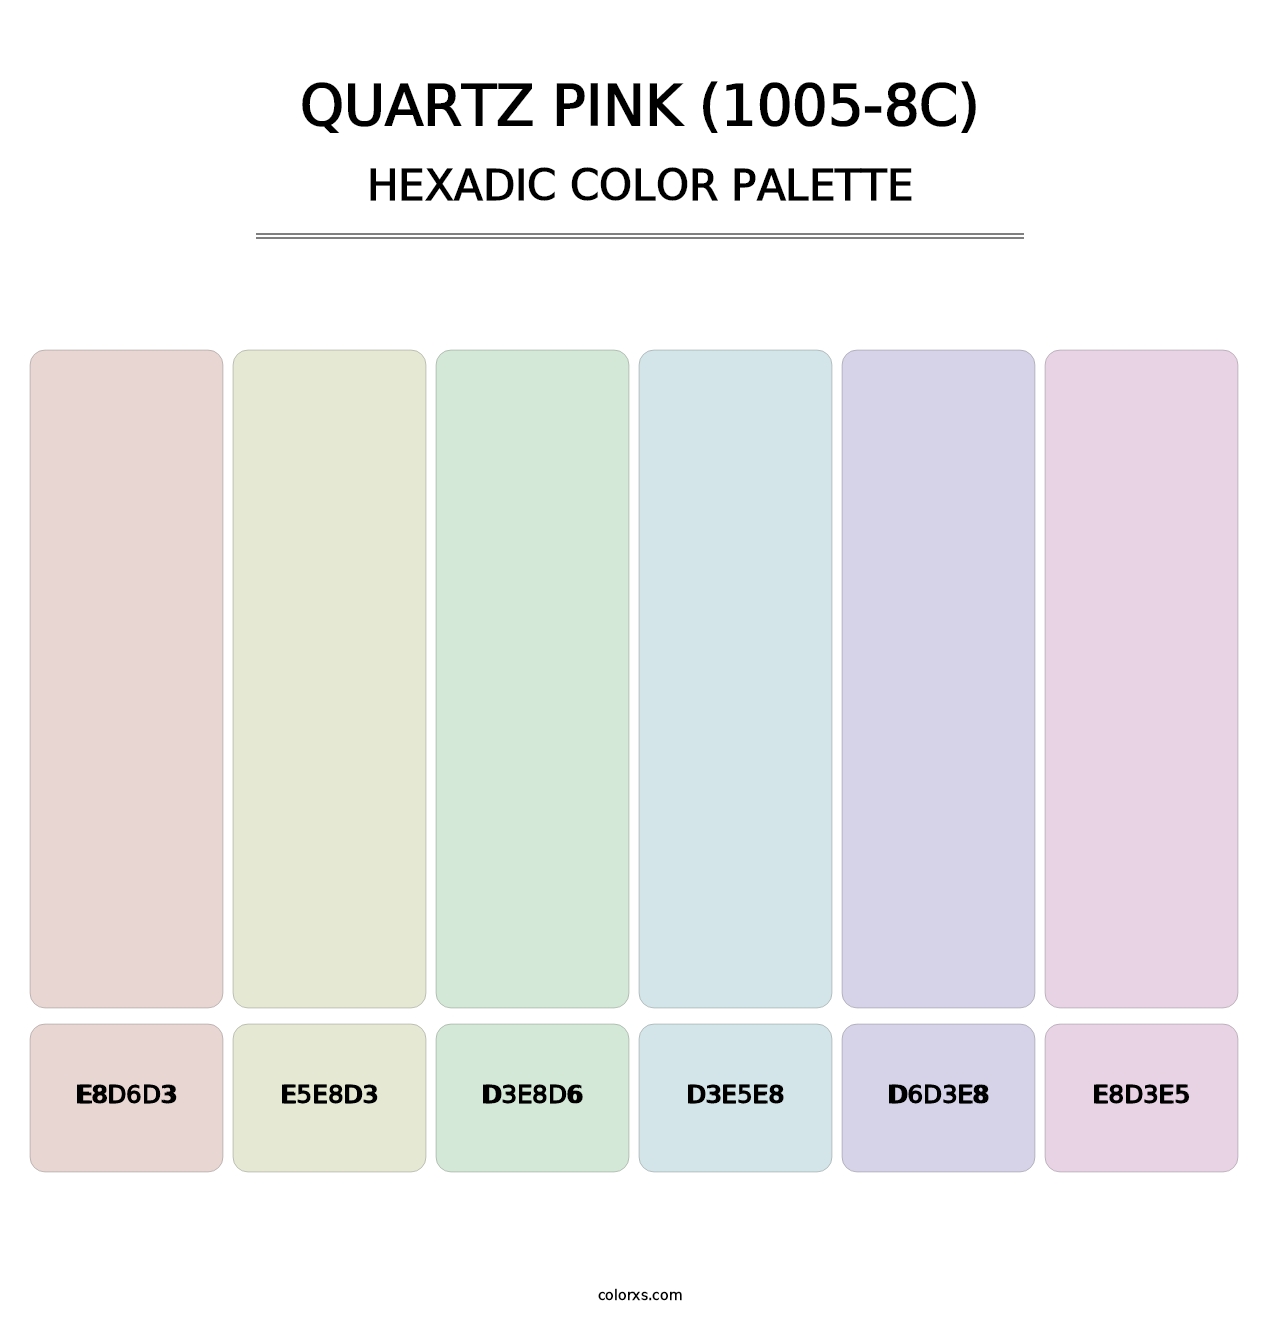 Quartz Pink (1005-8C) - Hexadic Color Palette